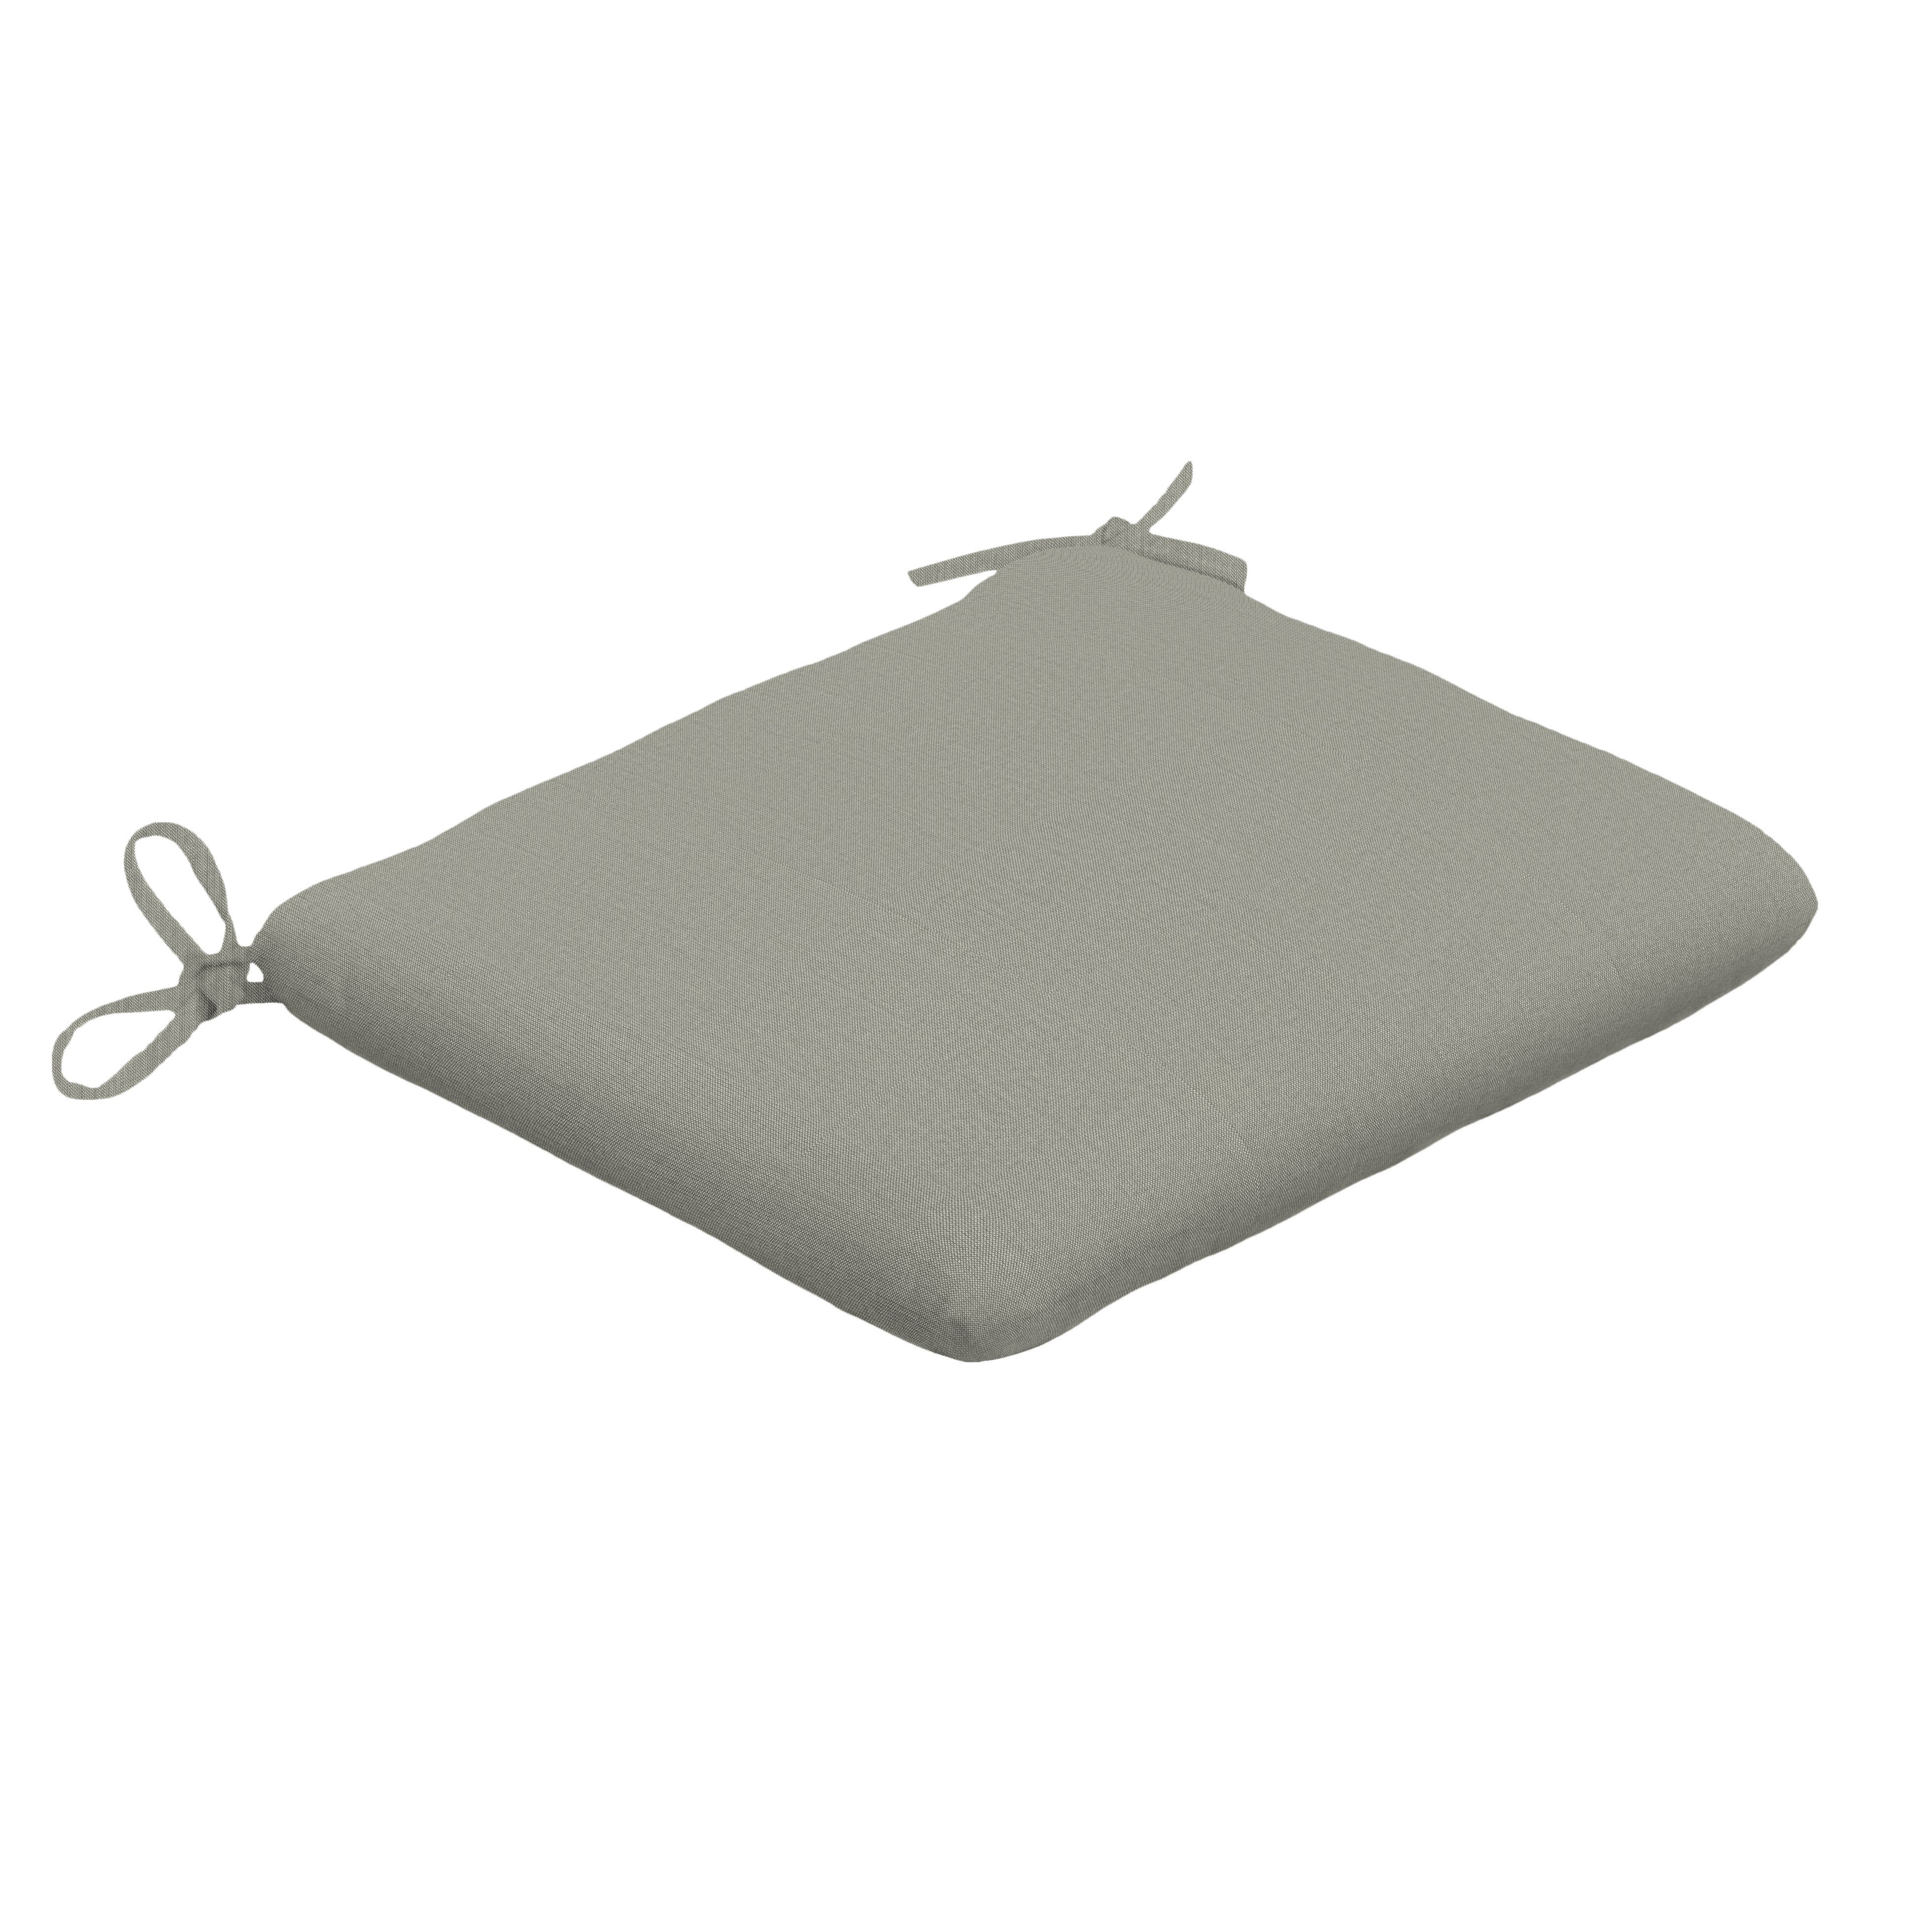 spectrum dove wrought iron dining cushion product image